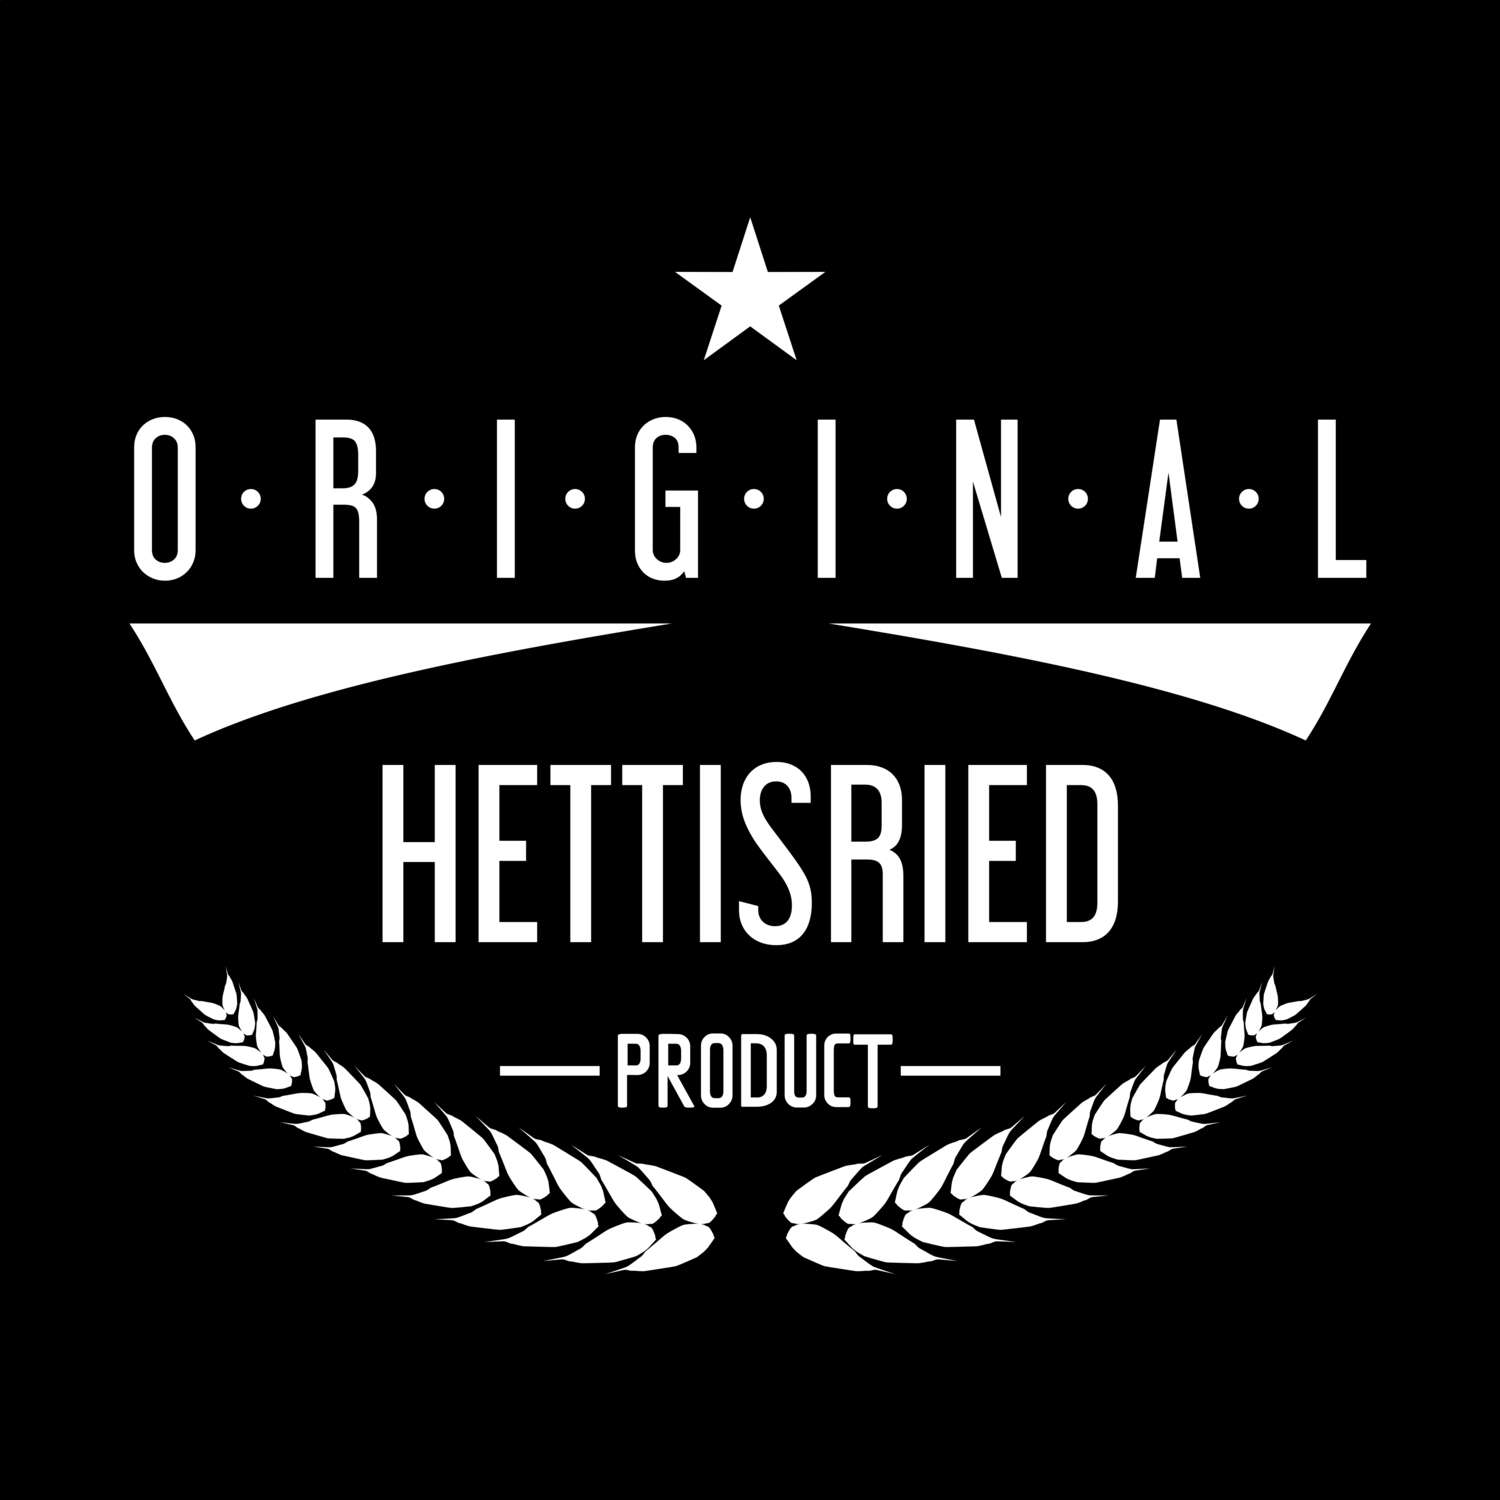 Hettisried T-Shirt »Original Product«